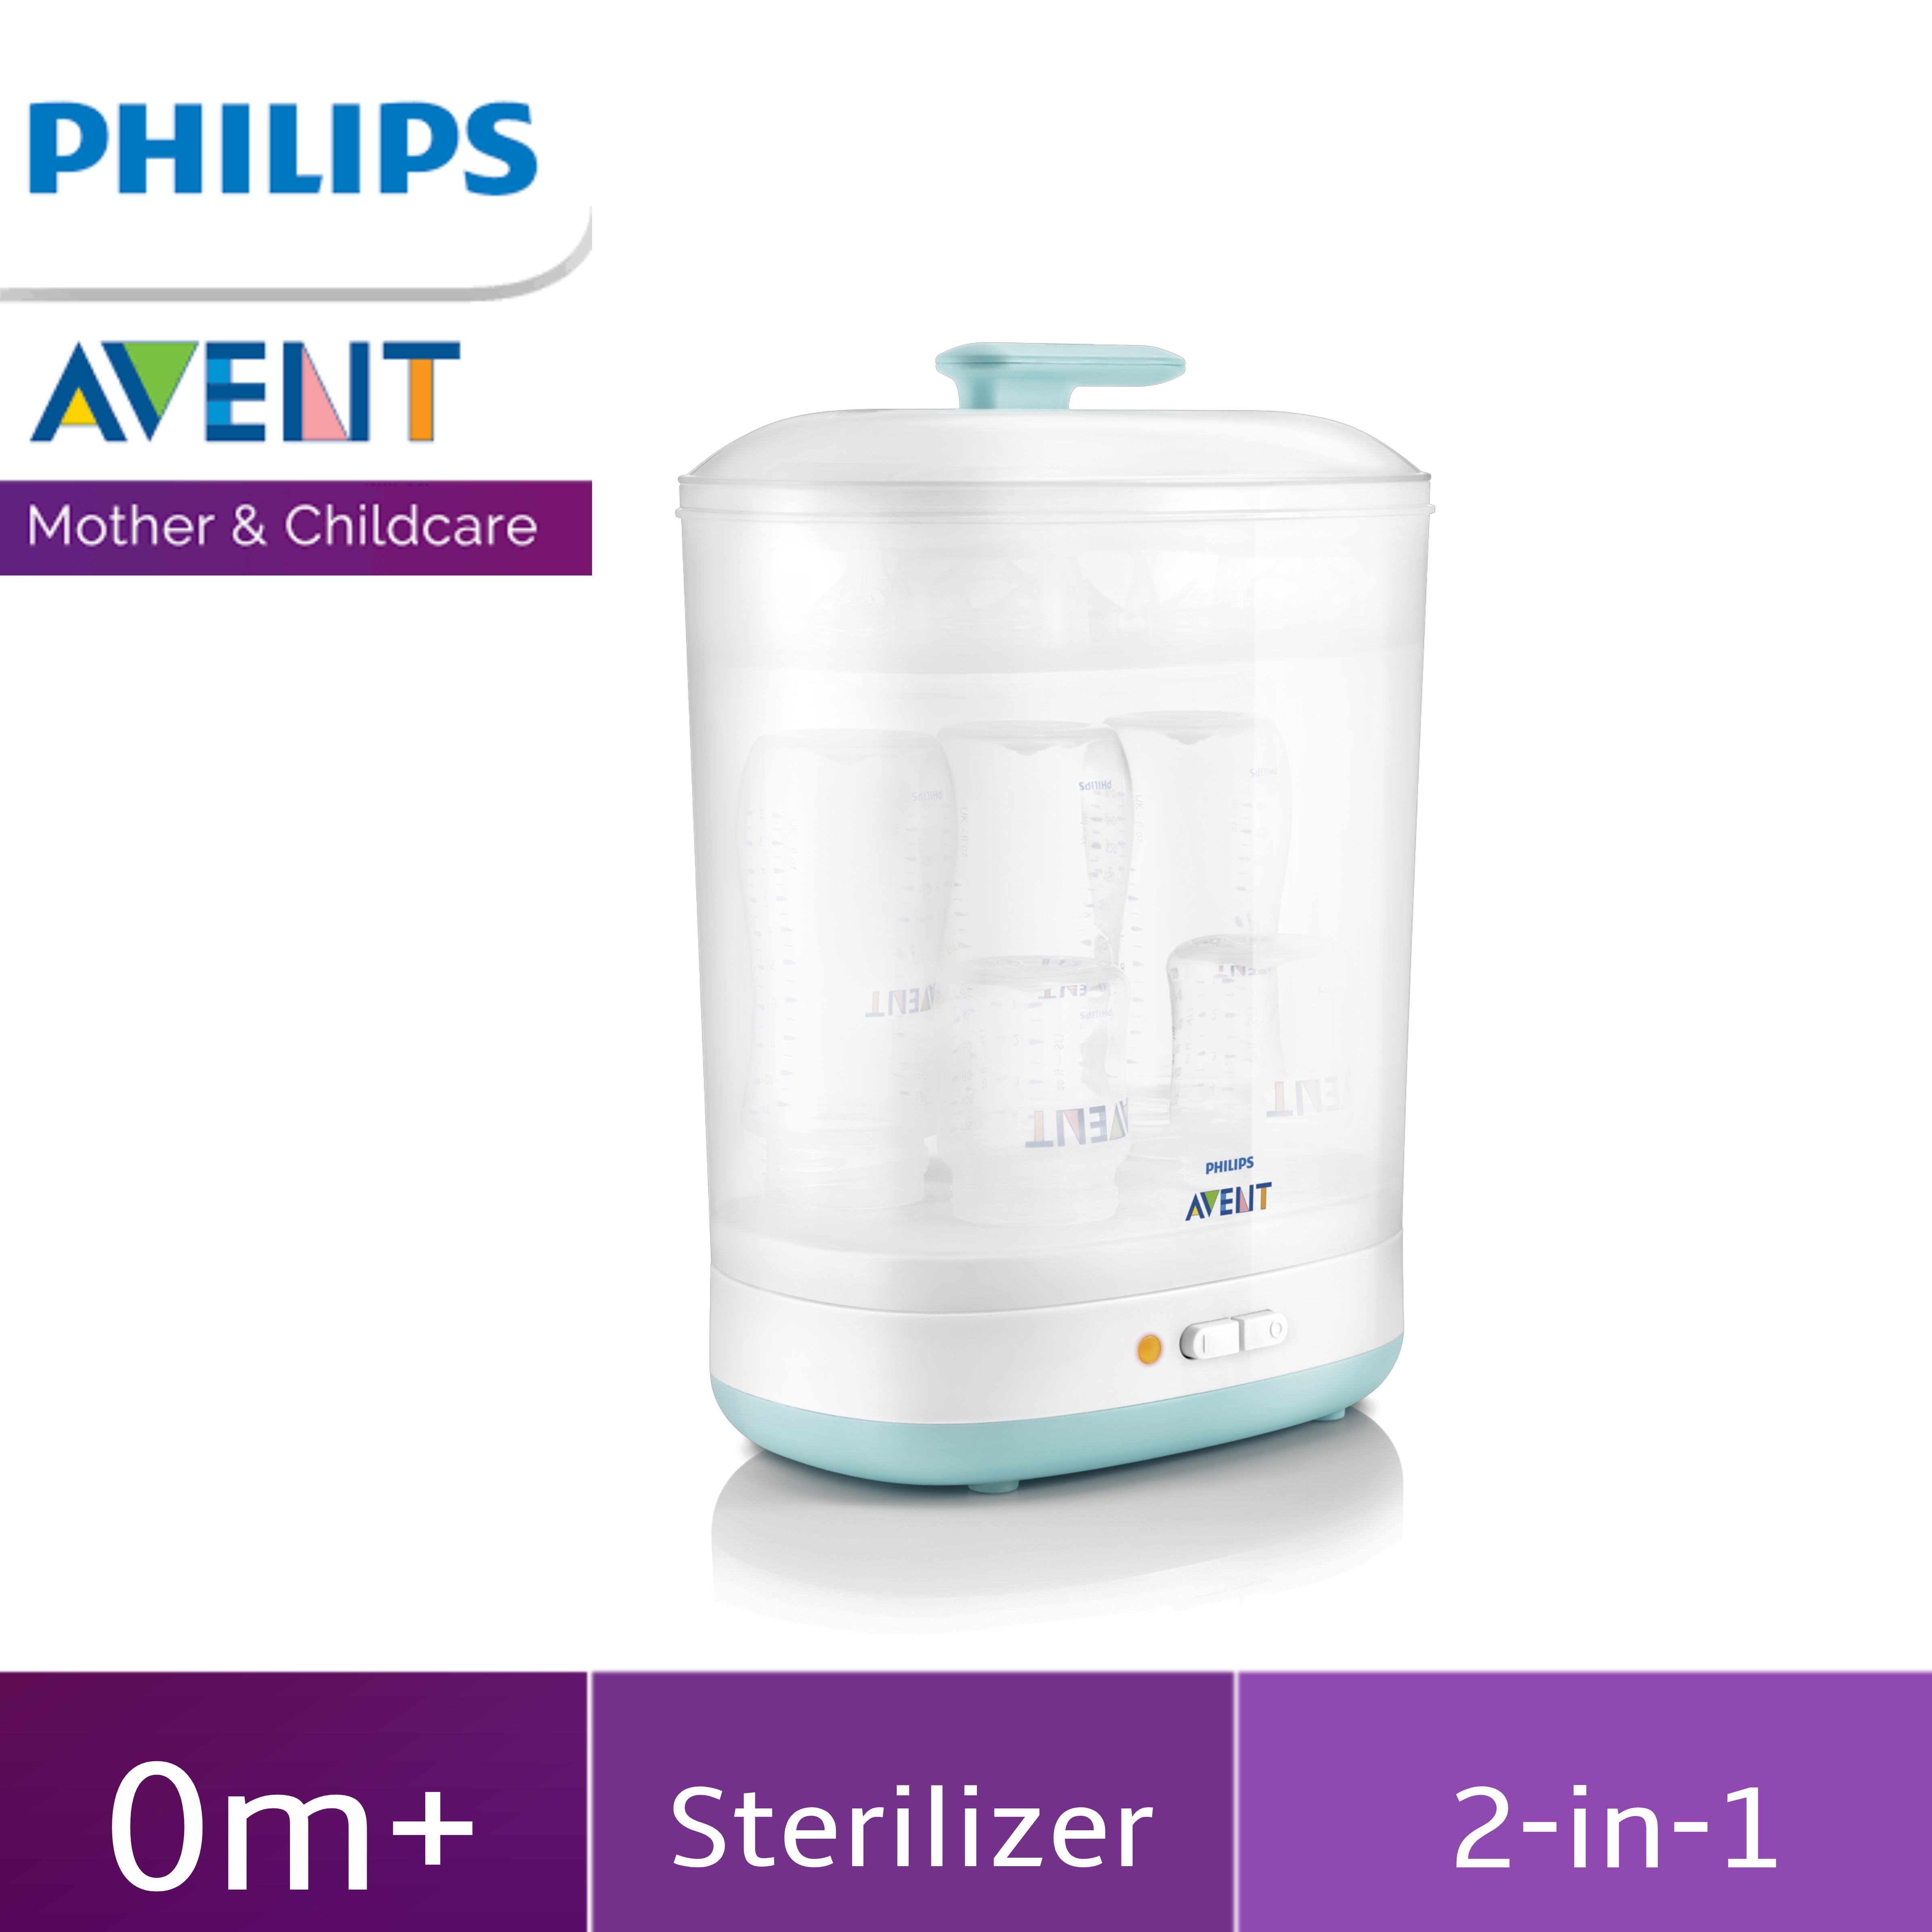 philip avent 3 in 1 electric steam sterilizer